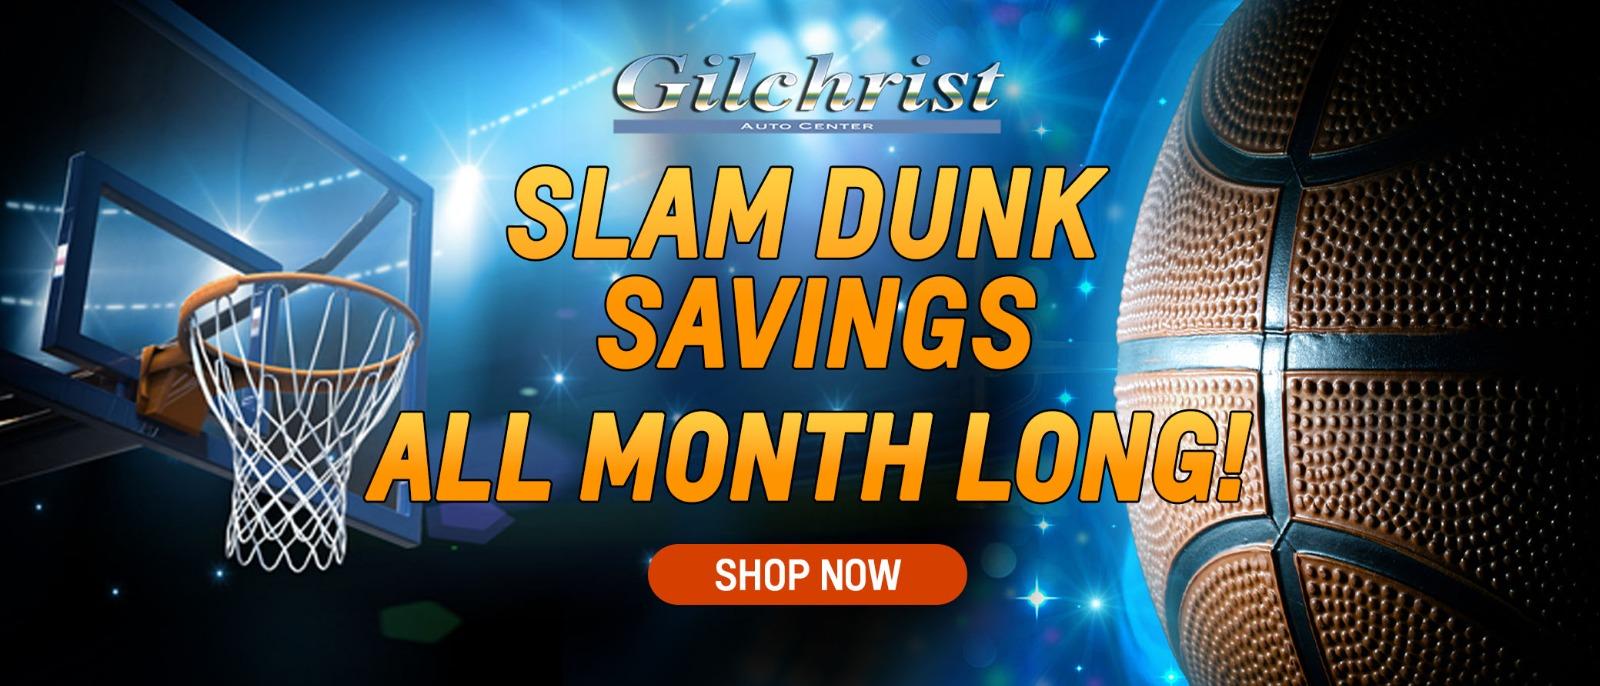 Slam Dunk Savings
ALL MONTH LONG!